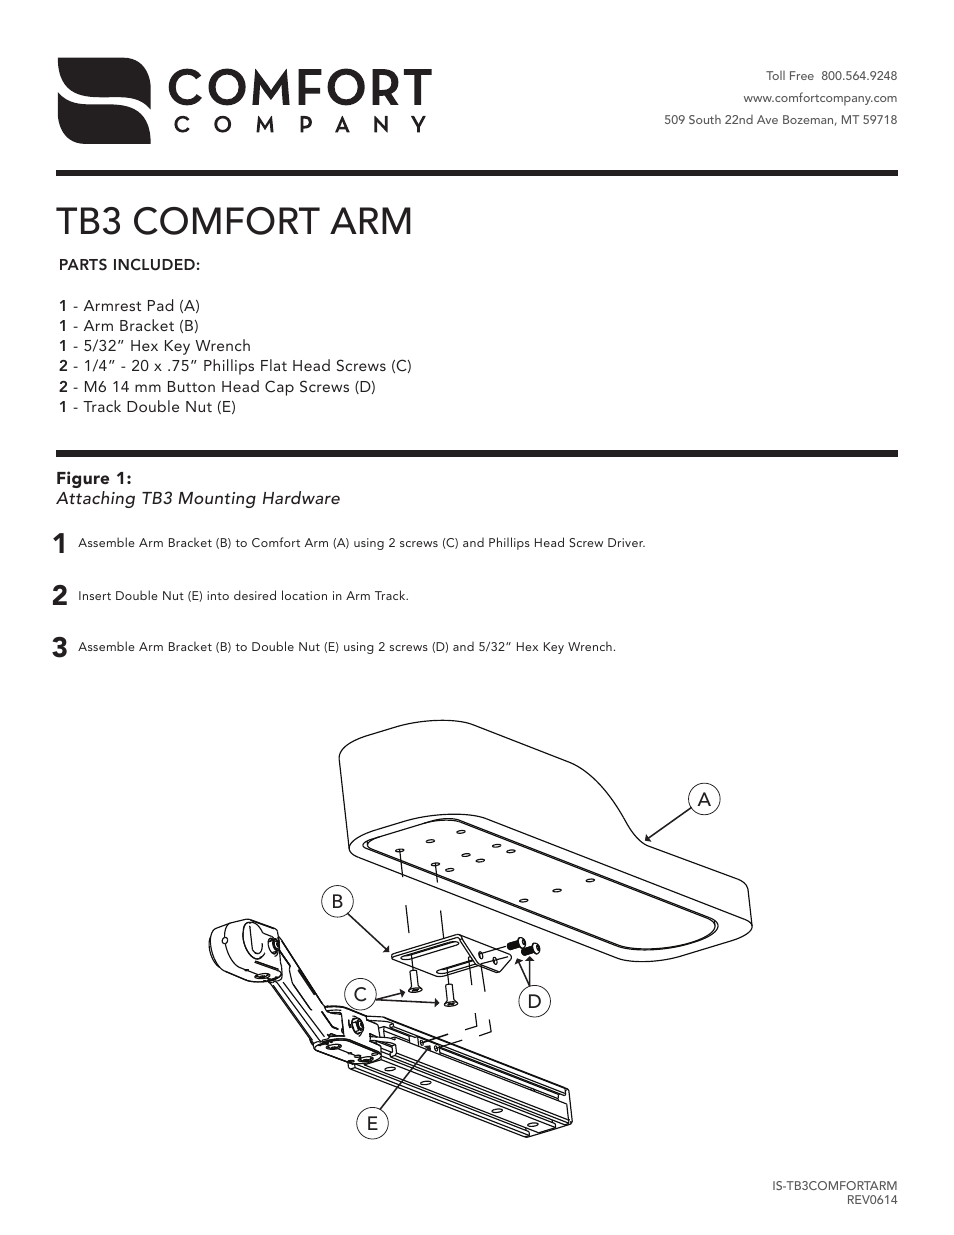 TB3 Comfort Arm